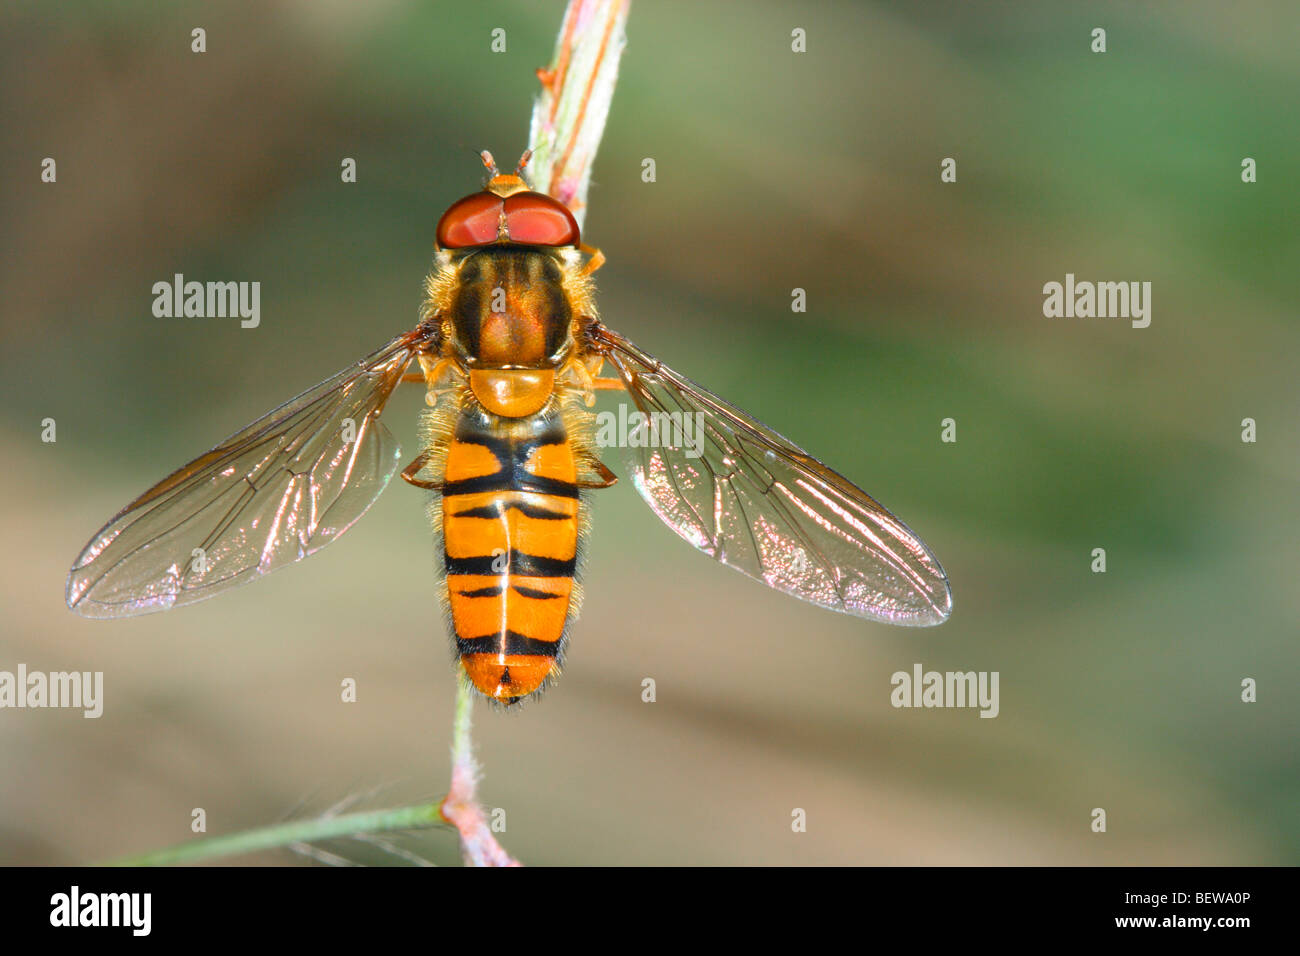 Hover-fly, Episyrphus balteatus. On stem Stock Photo